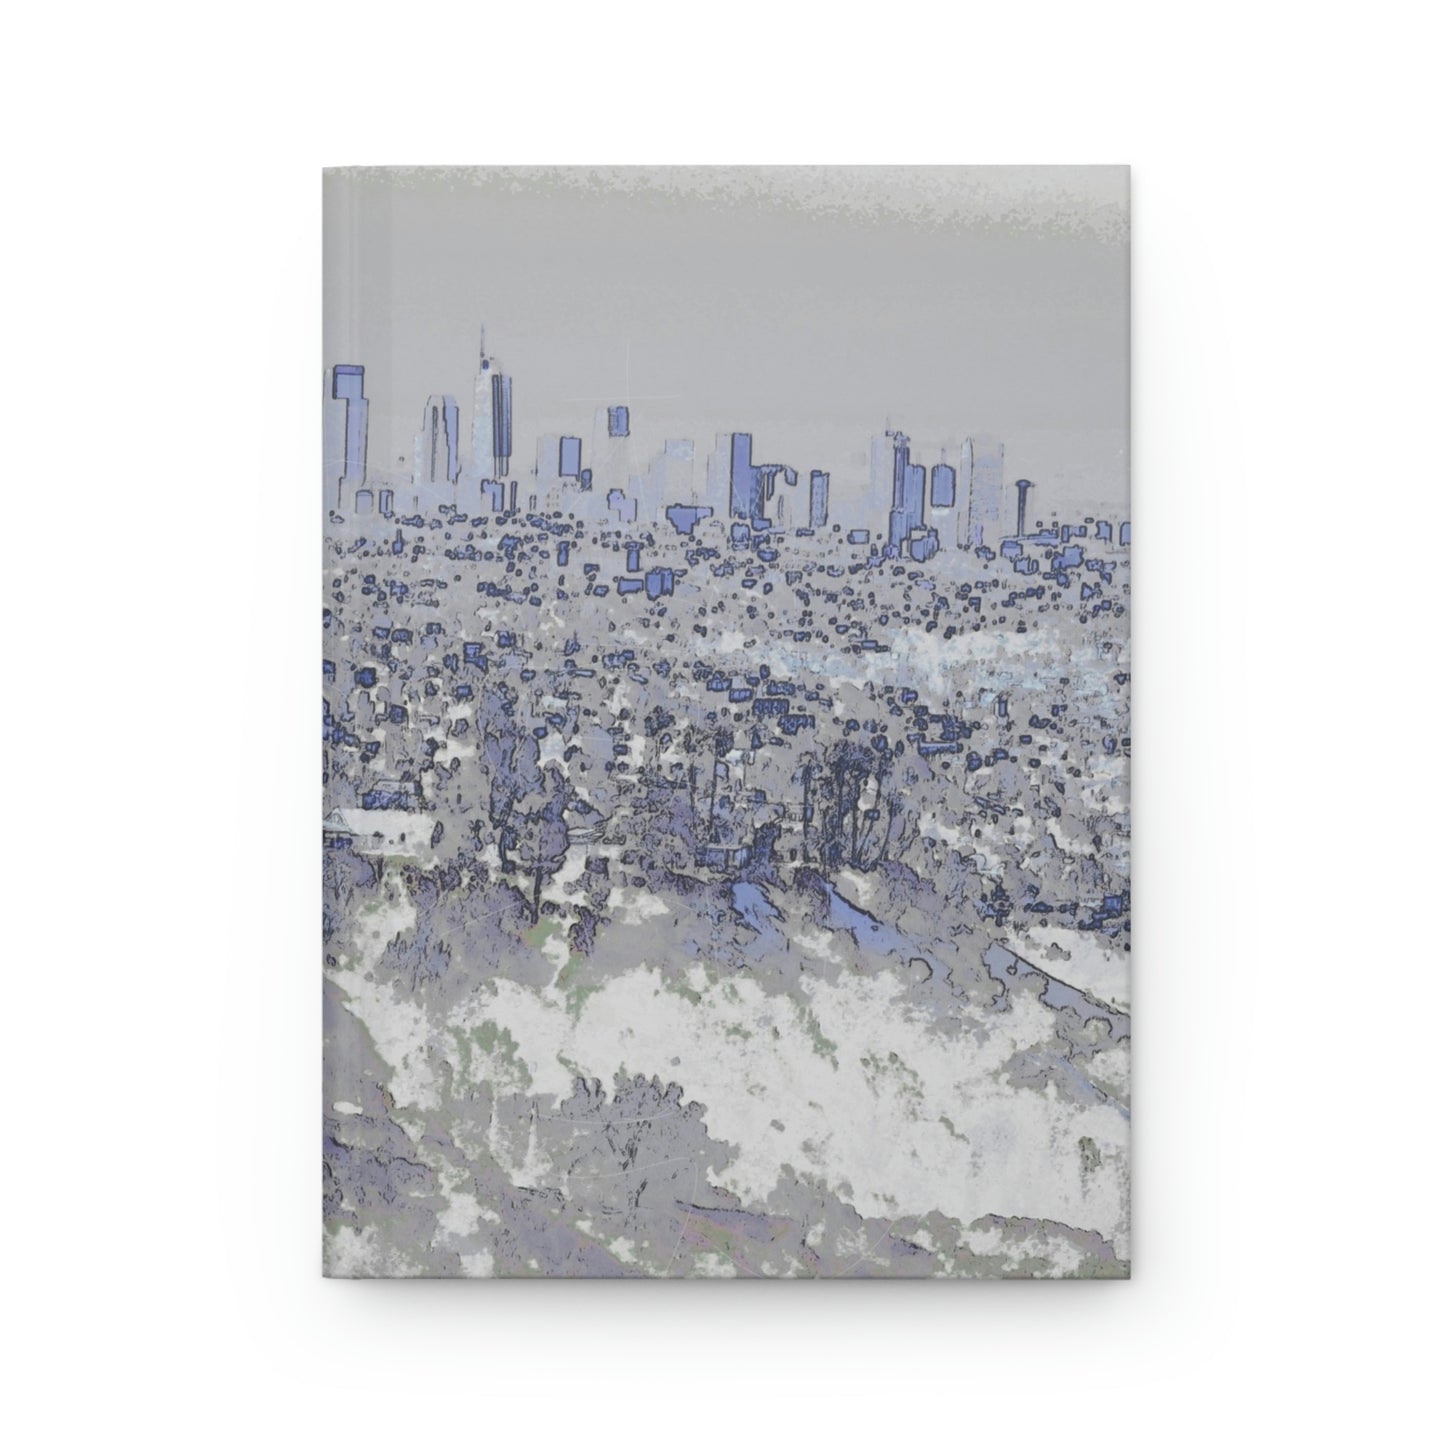 Indigo and gray abstract retro cityscape hardcover journal - matte finish